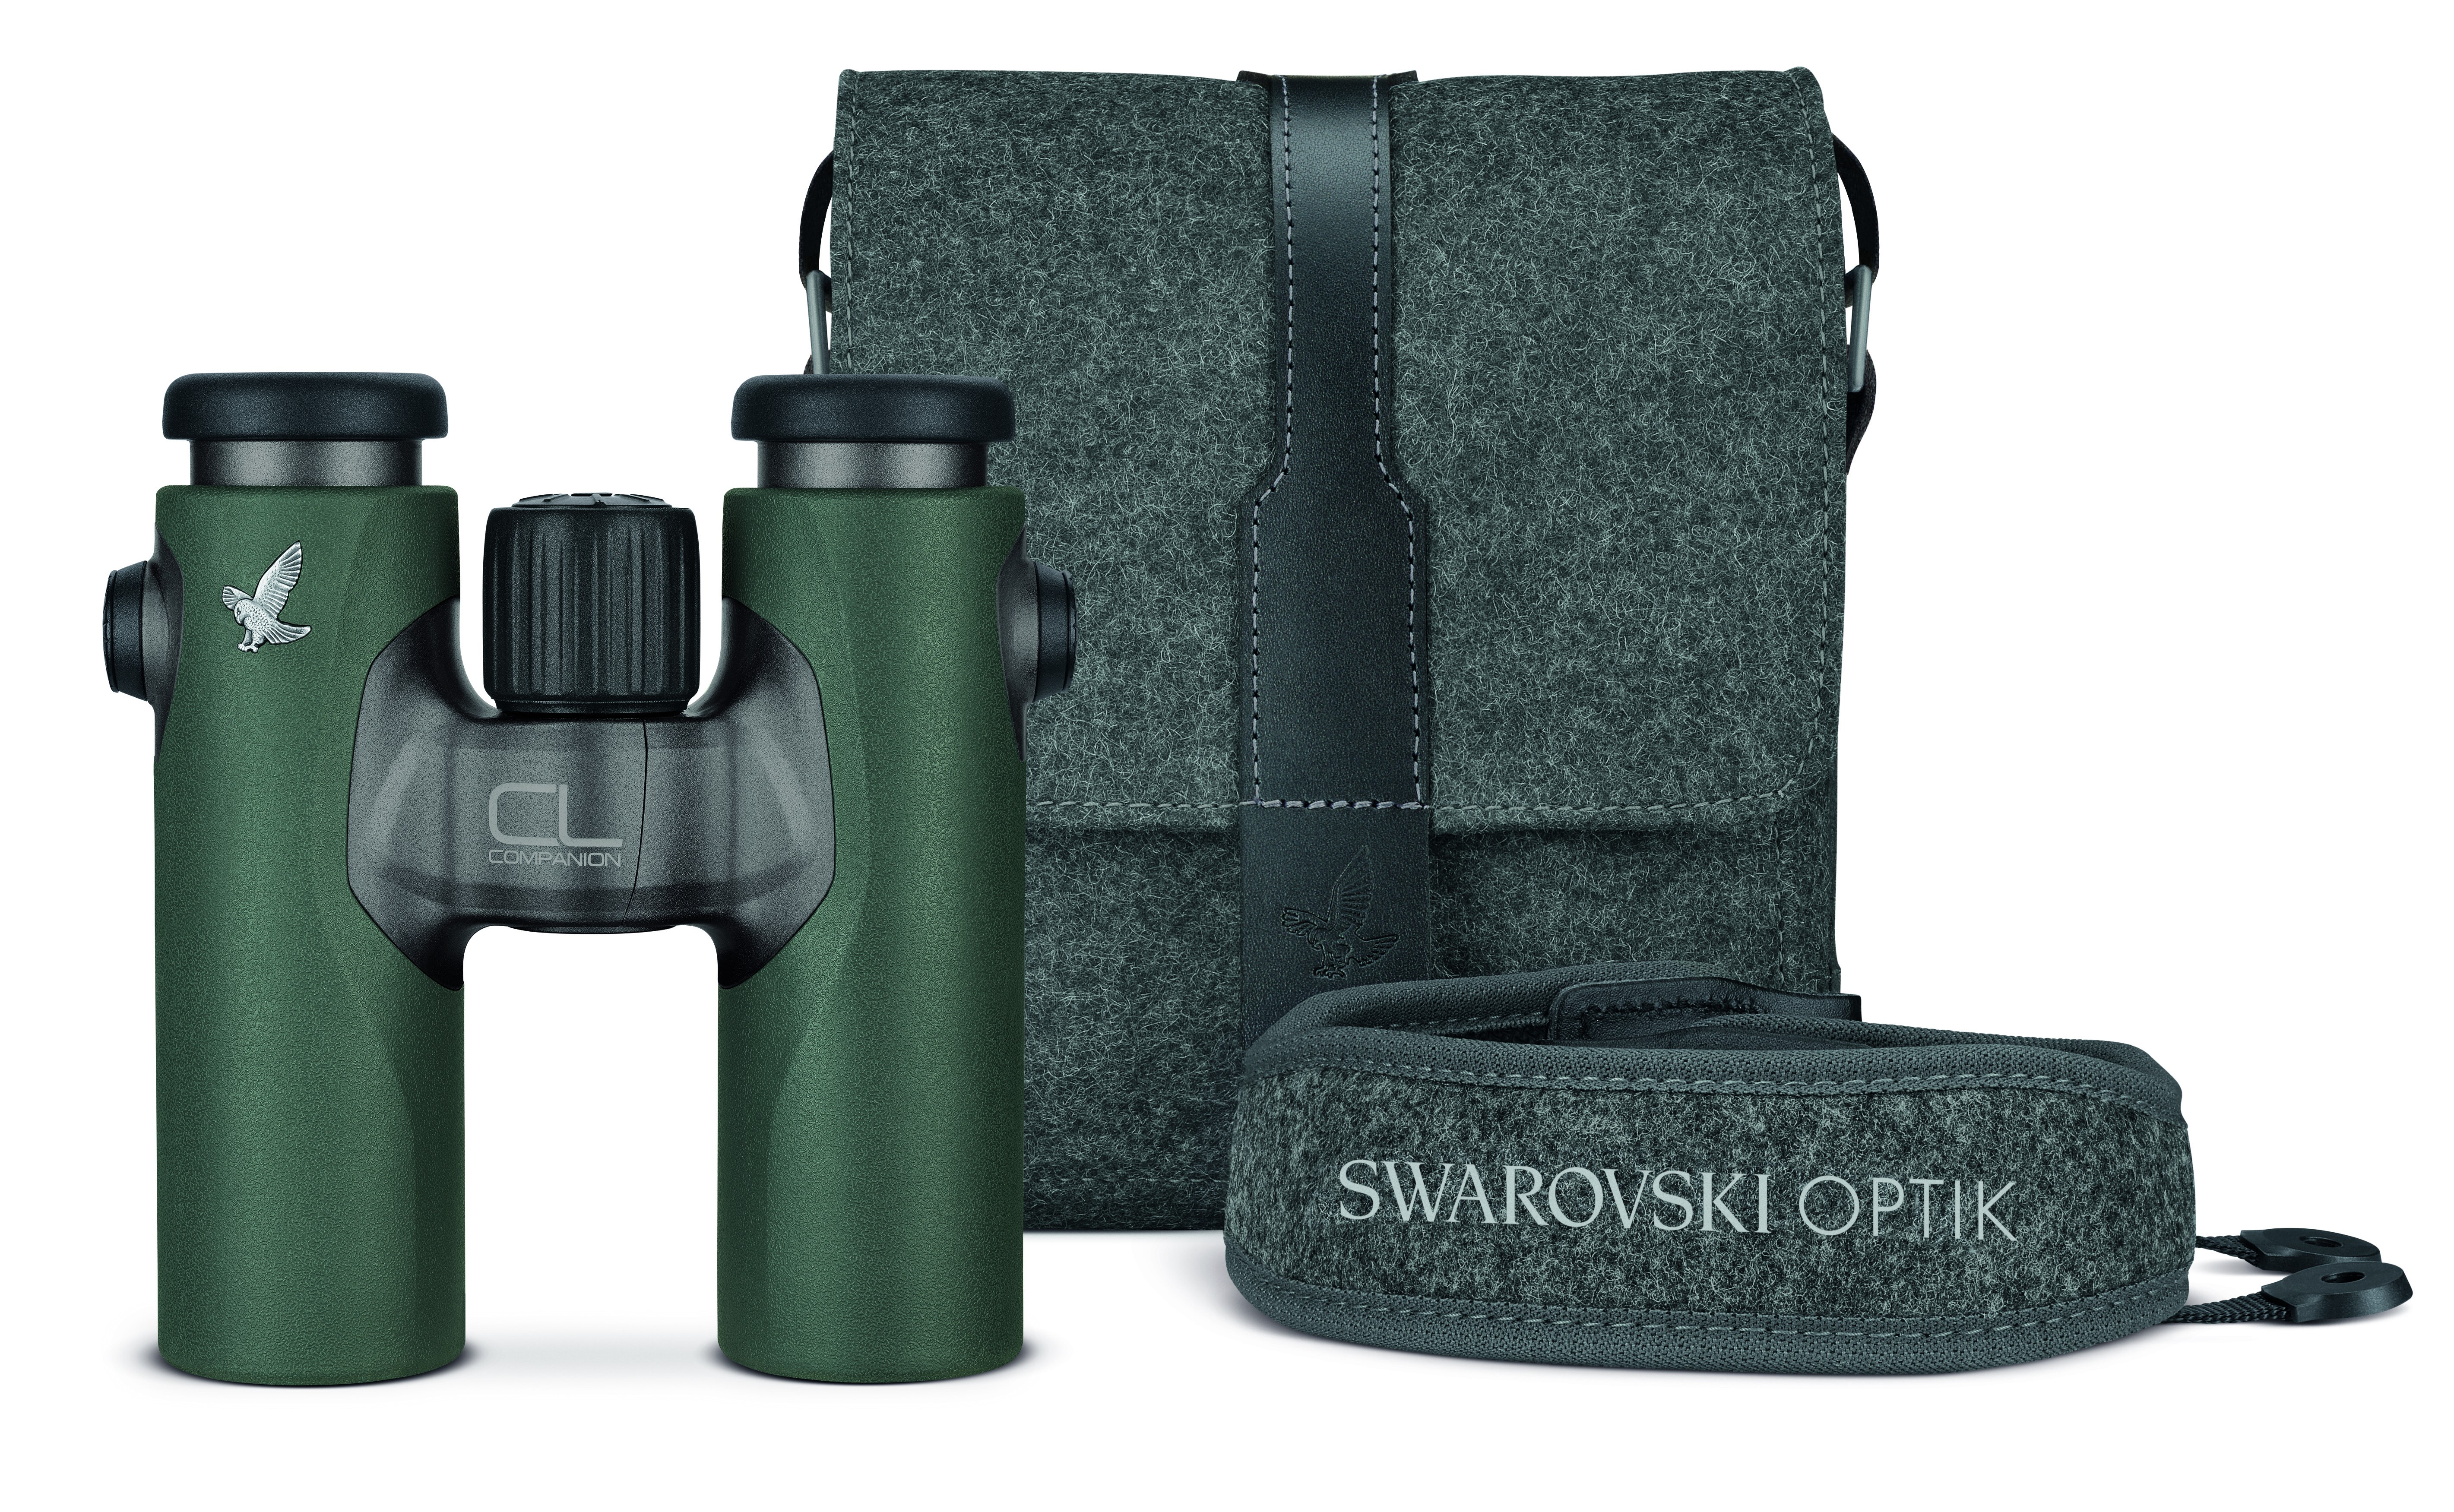 Swarovski CL Companion 8 X 30 Green - Northern Lights package